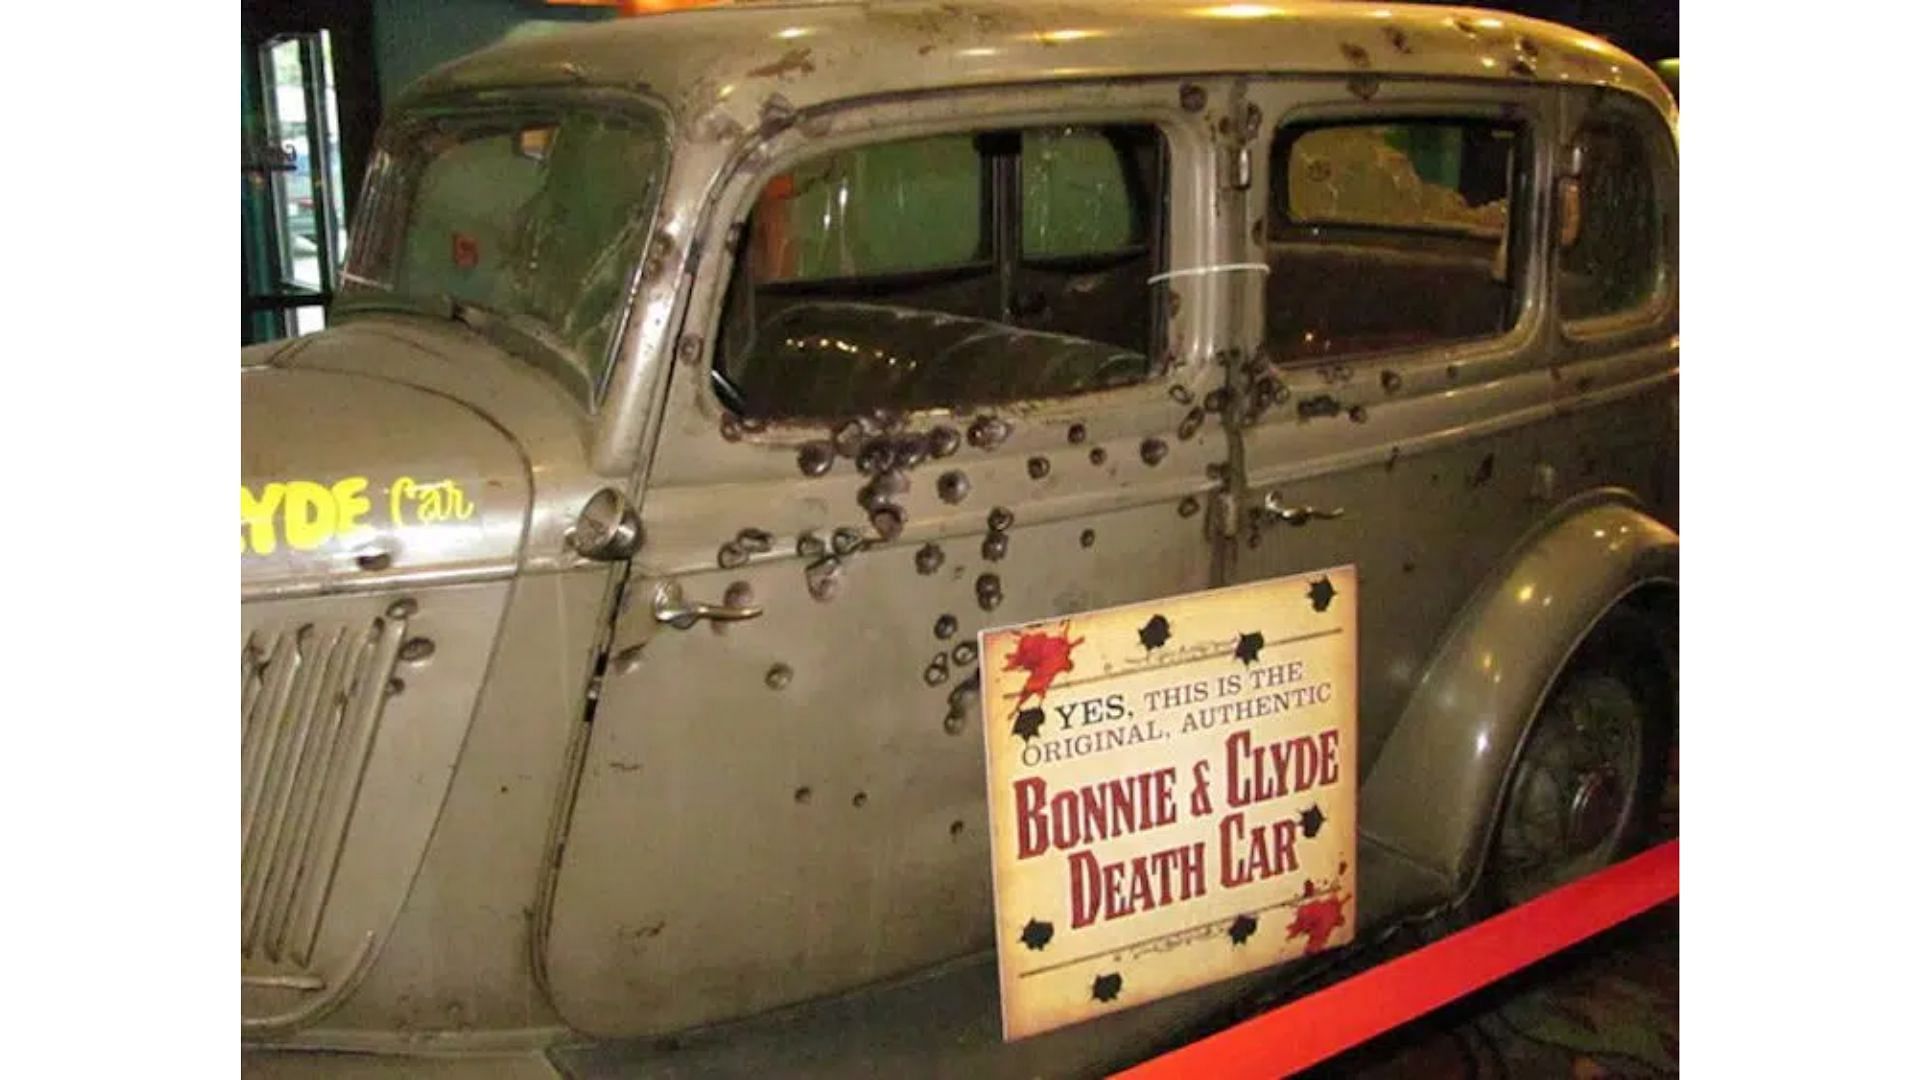 The original Bonnie and Clyde Death Car (Image via Historic Vehicles)